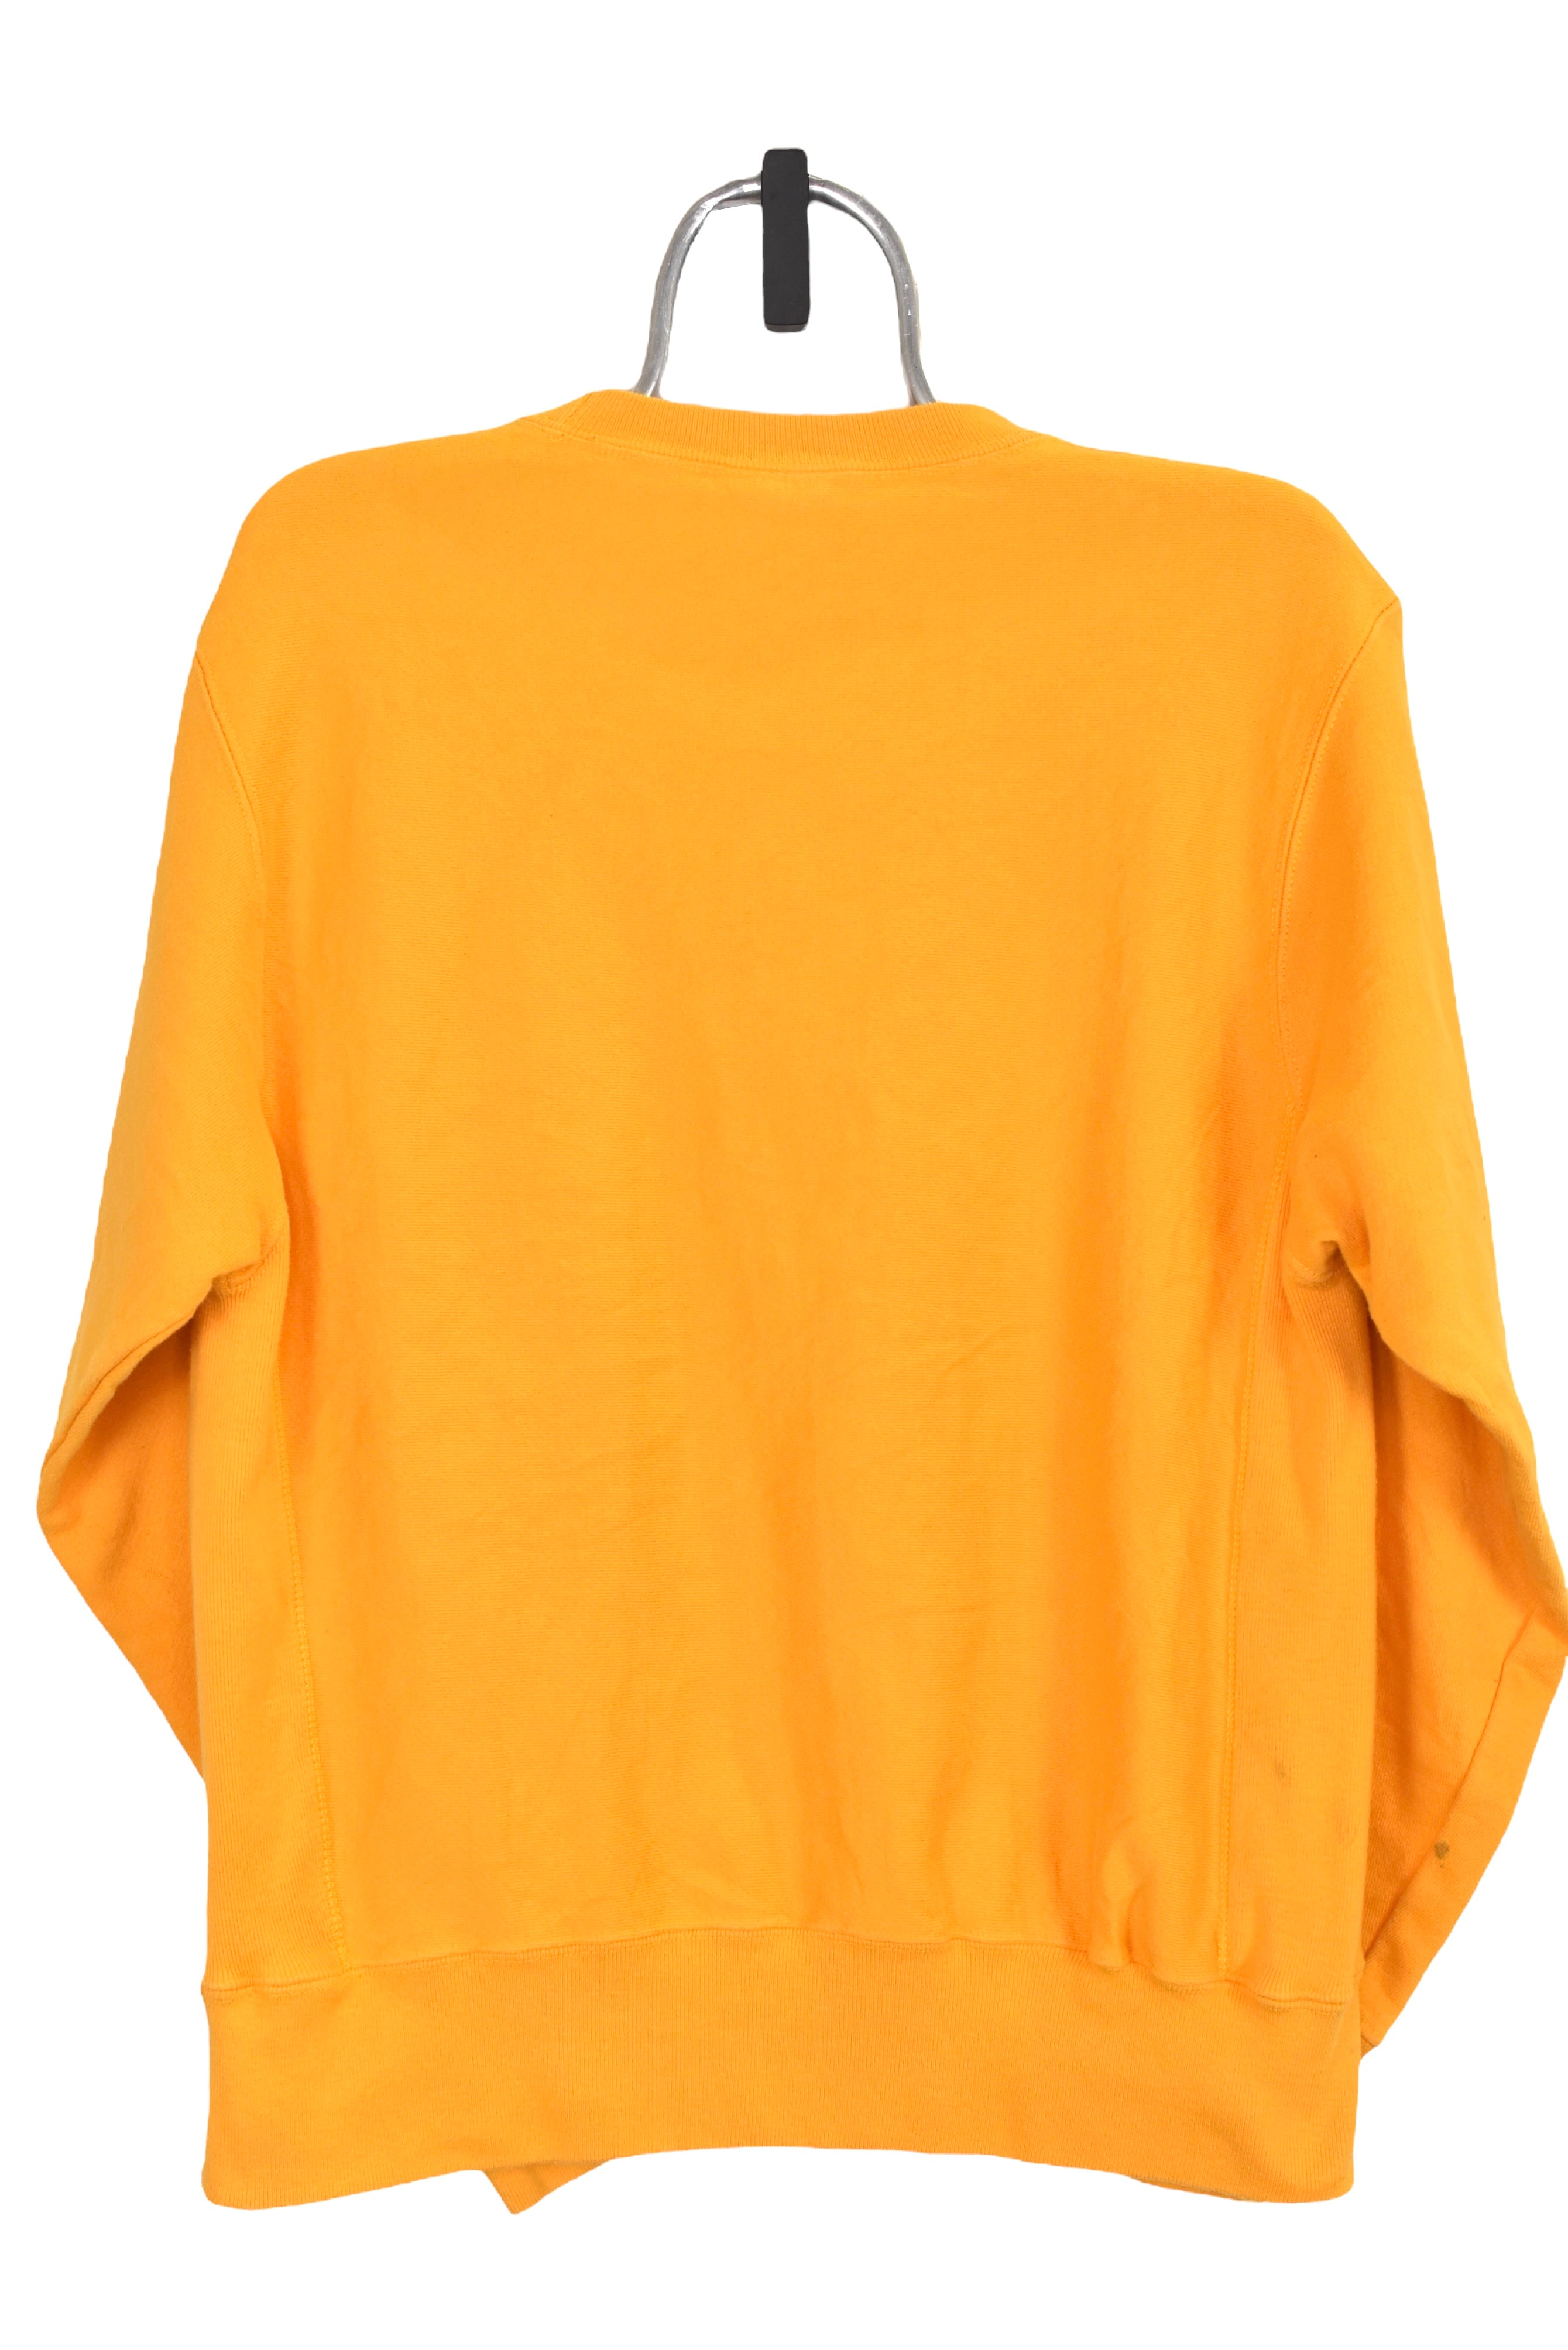 Modern Champion sweatshirt (M), yellow logo crewneck